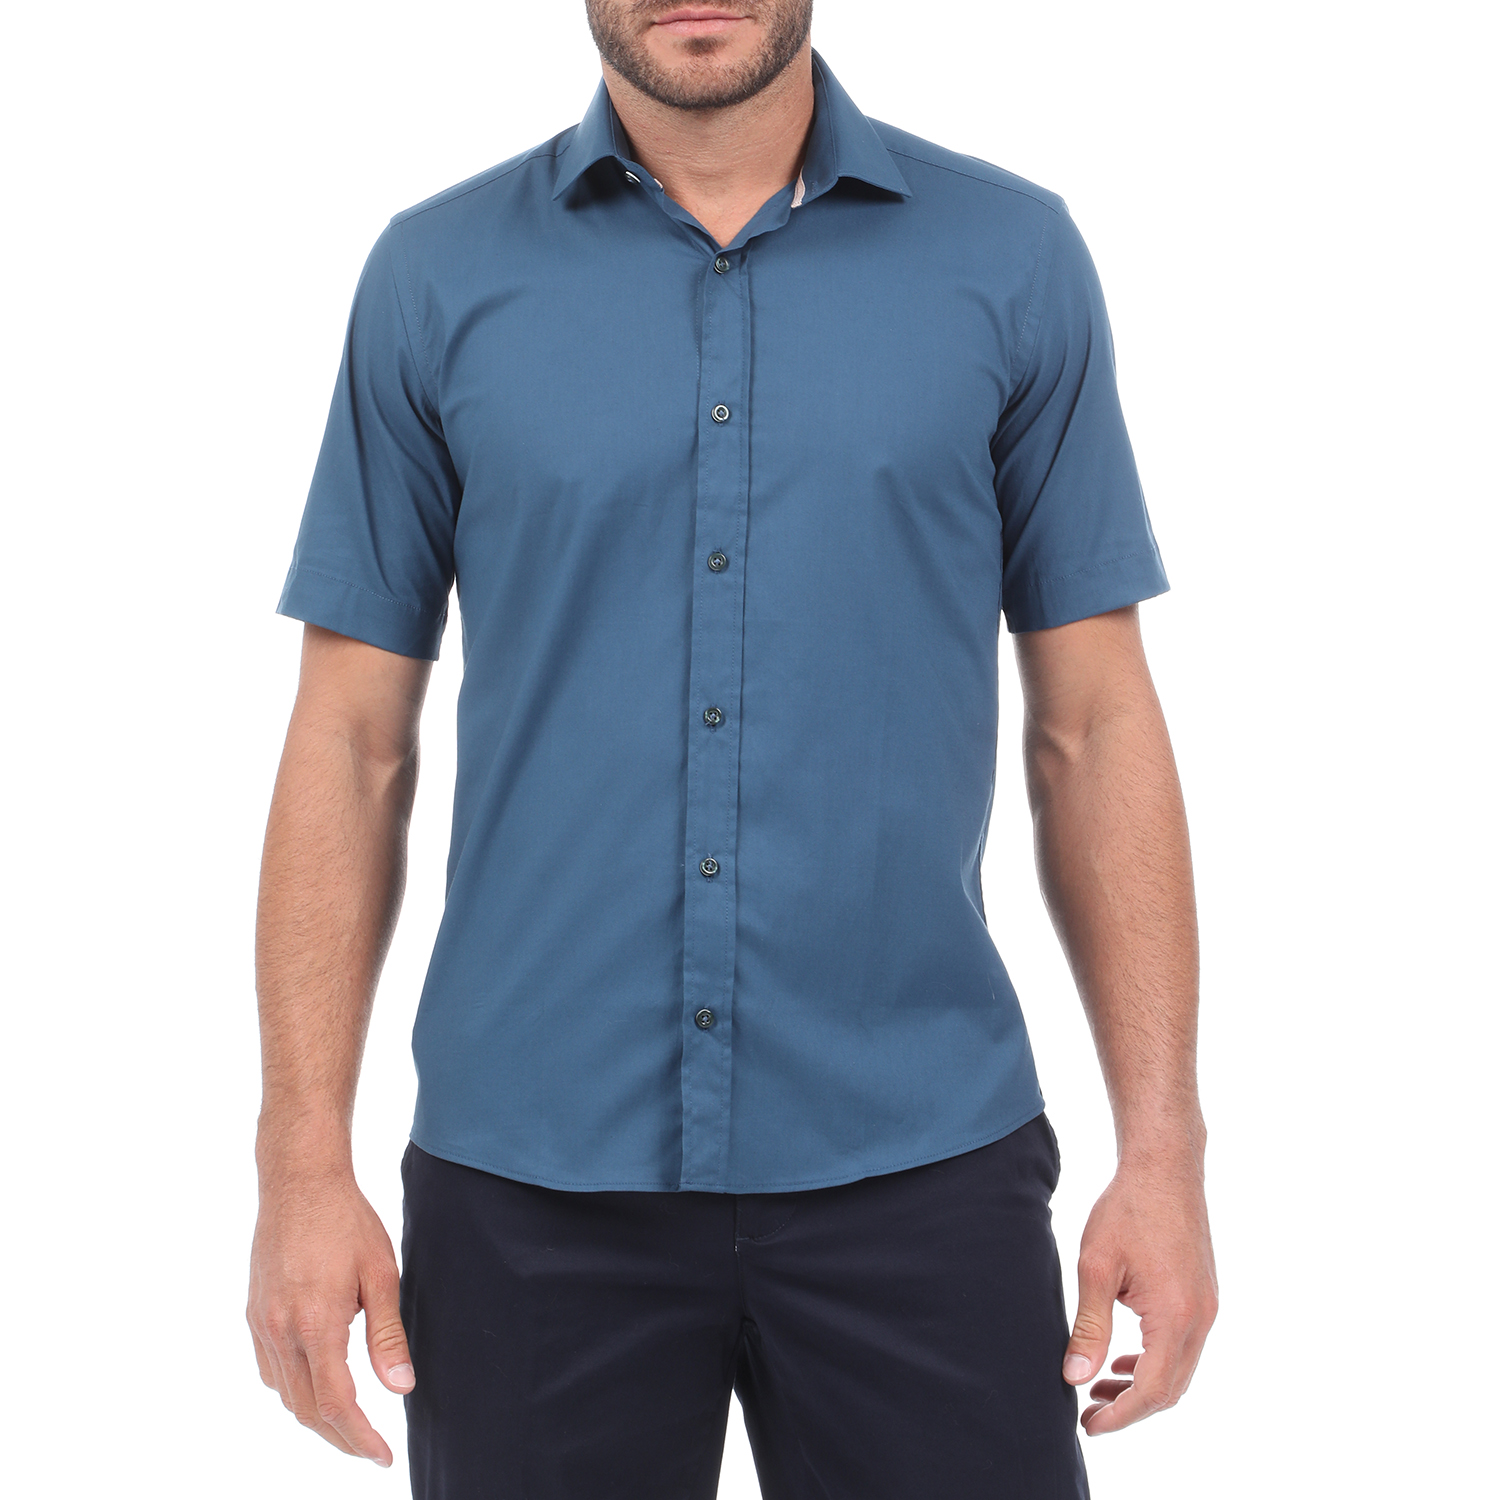 MARTIN & CO MARTIN & CO - Ανδρικό πουκάμισο MARTIN & CO SLIM FIT μπλε